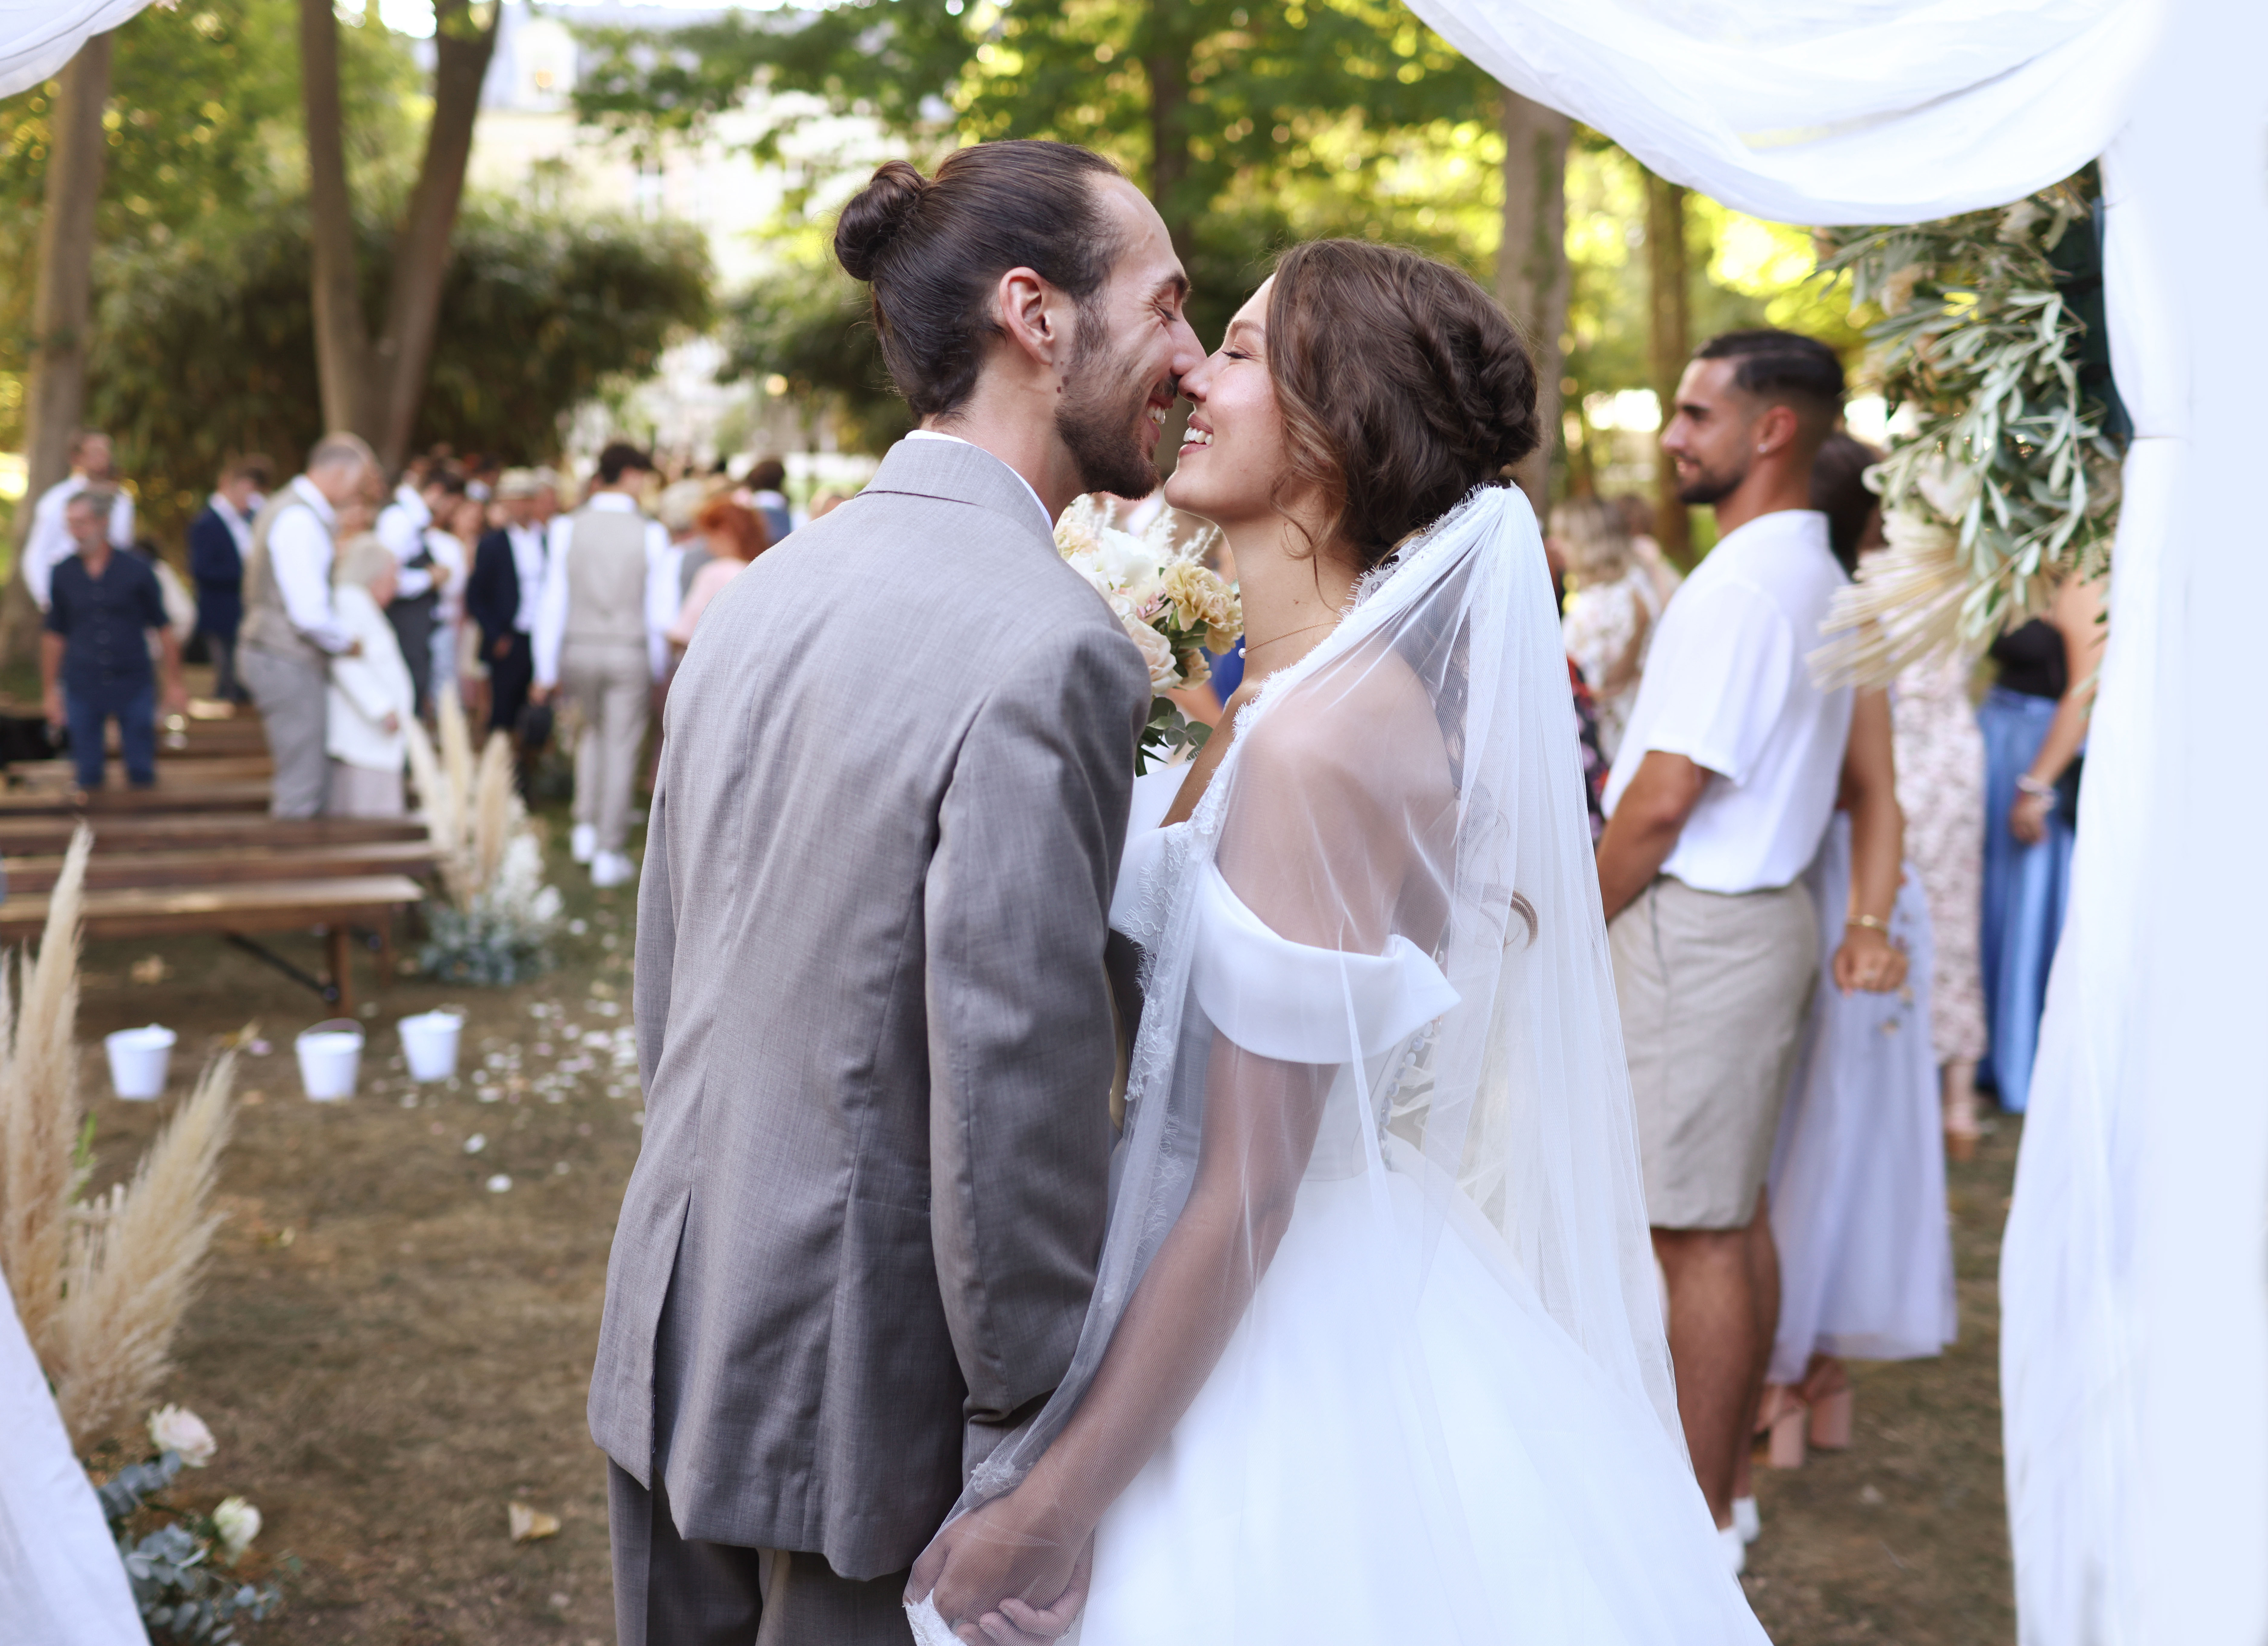 Una boda feliz | Foto: Getty Images